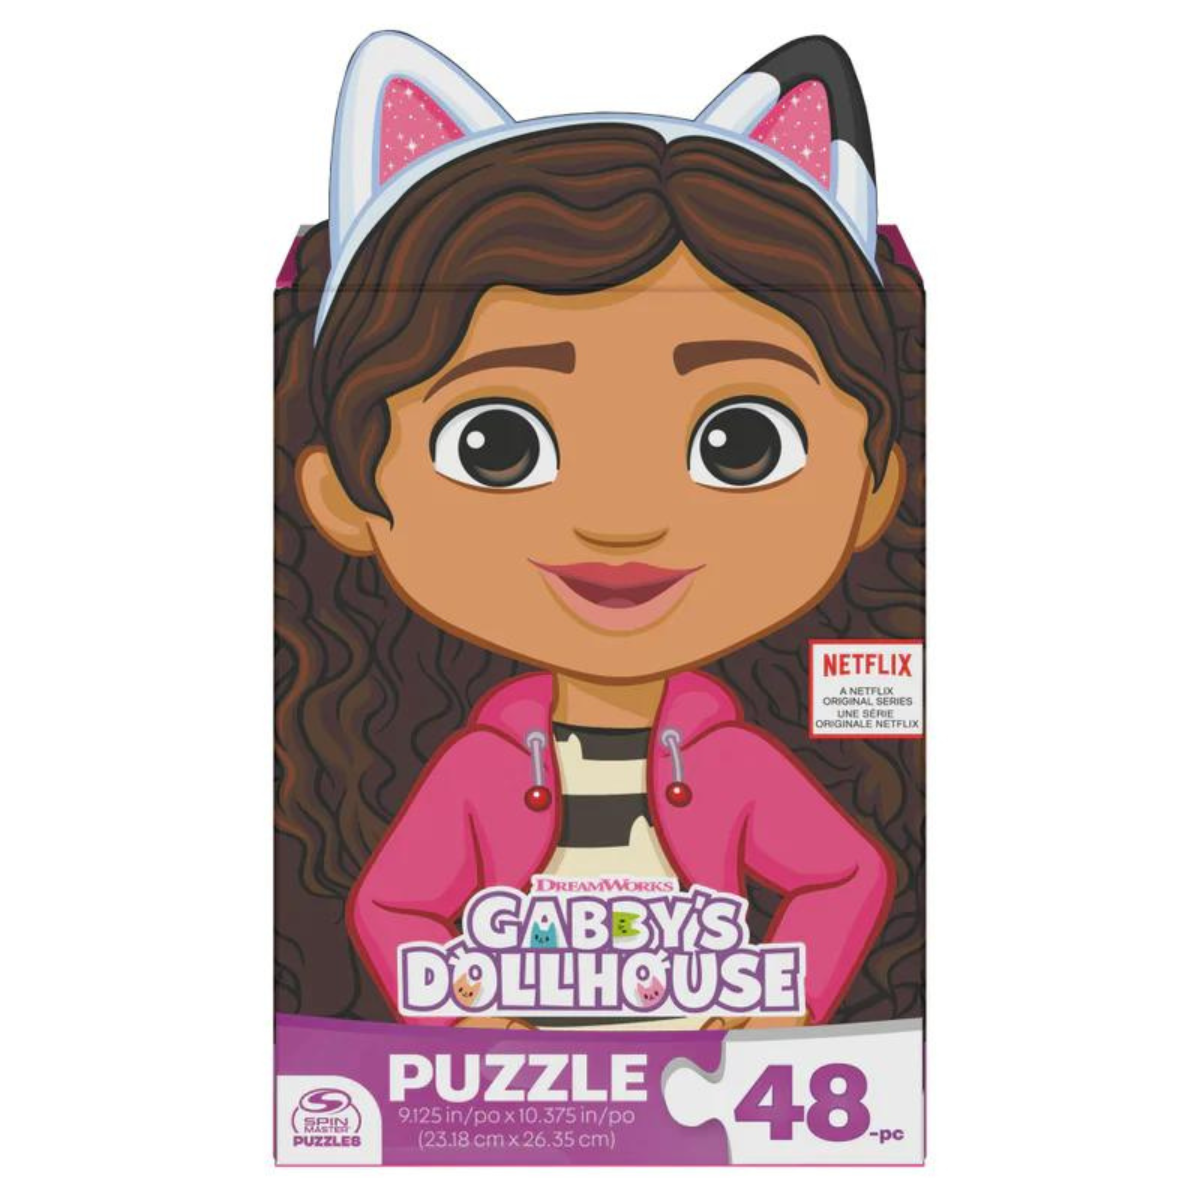 Gabby DollHouse Puzzle